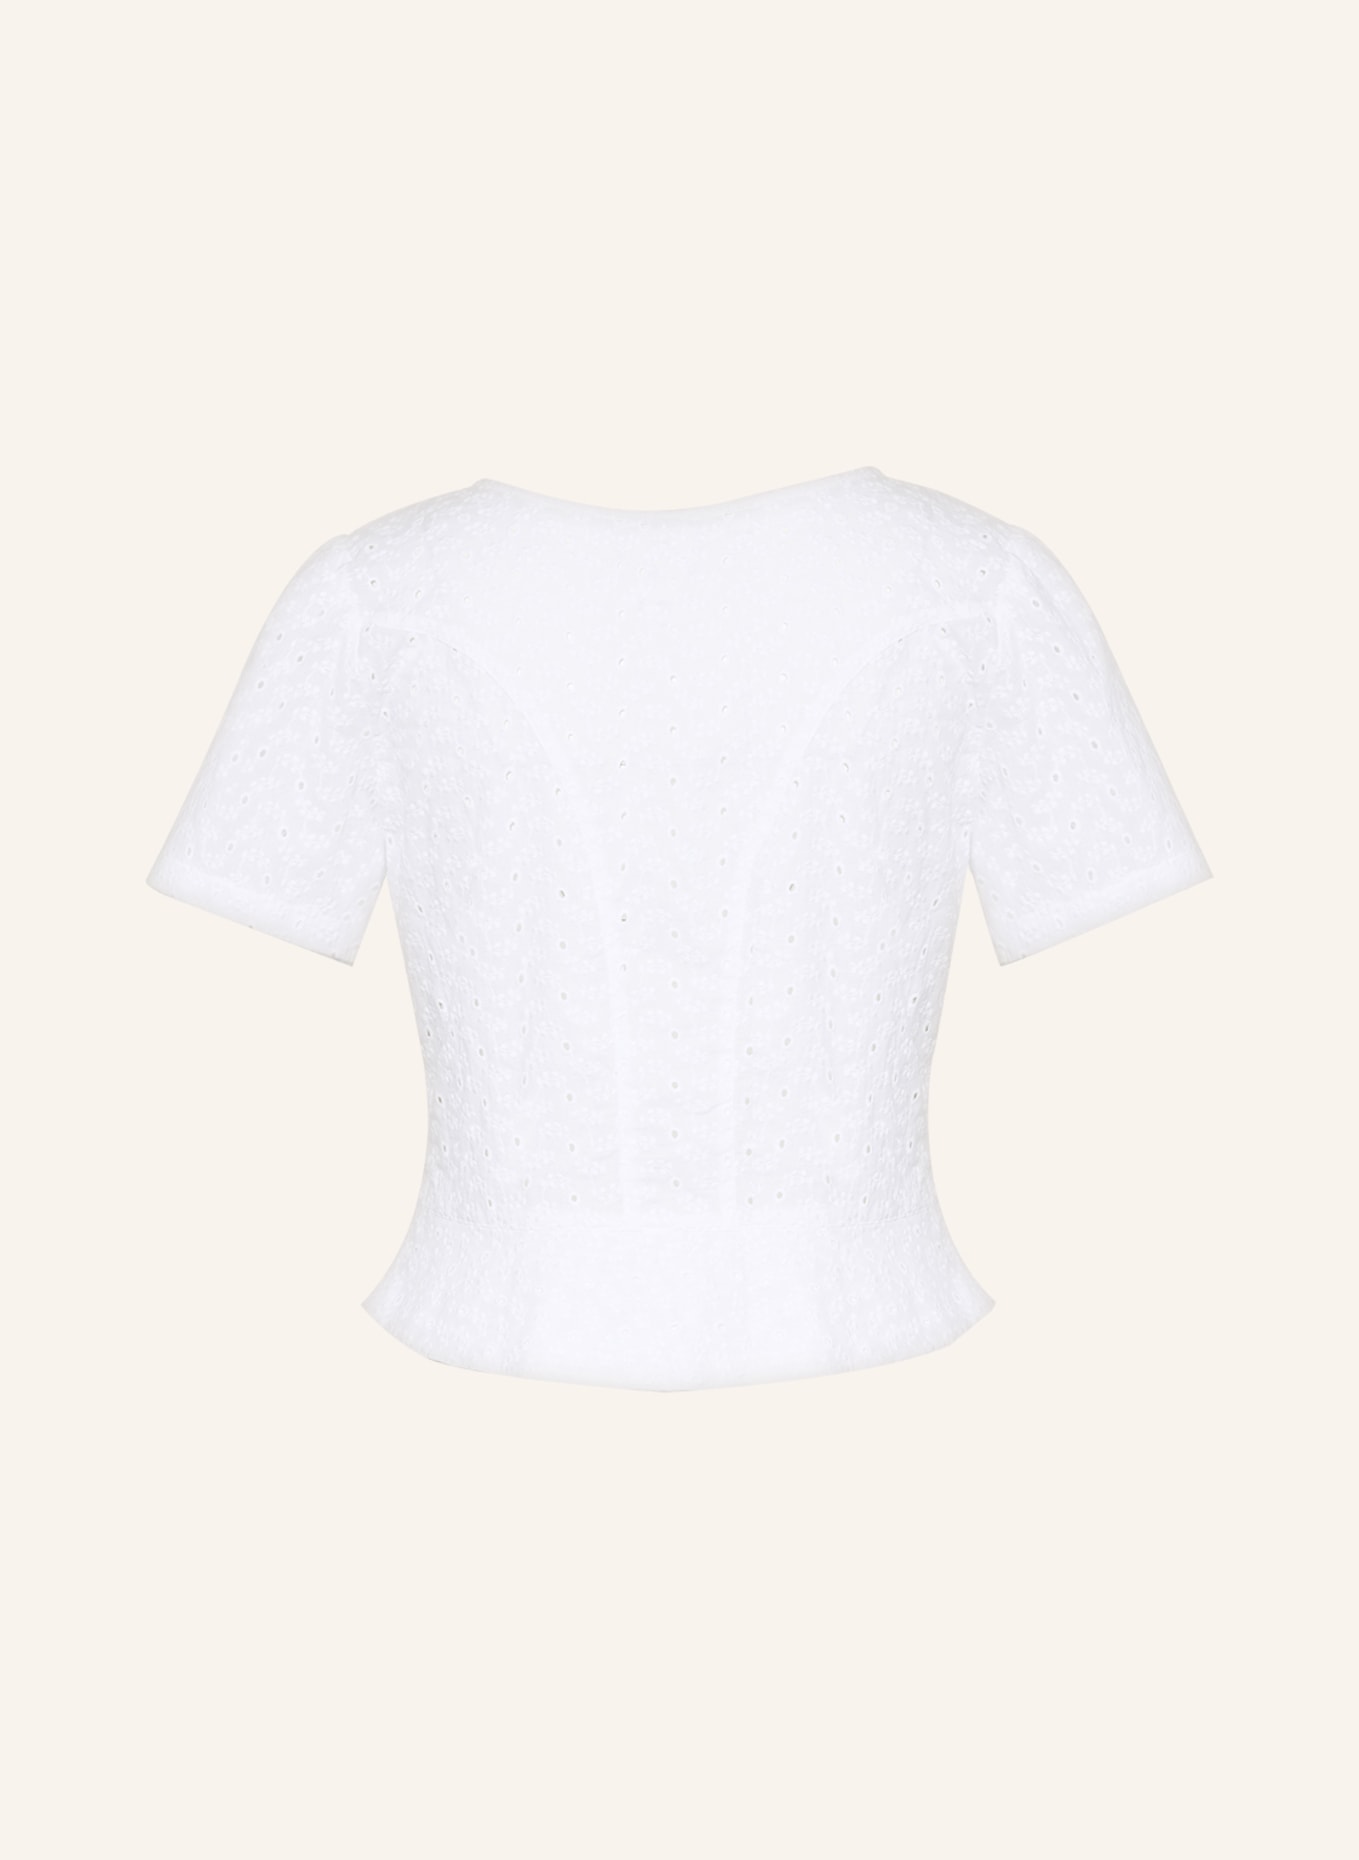 Hammerschmid Dirndl blouse MANUELA in lace, Color: WHITE (Image 2)